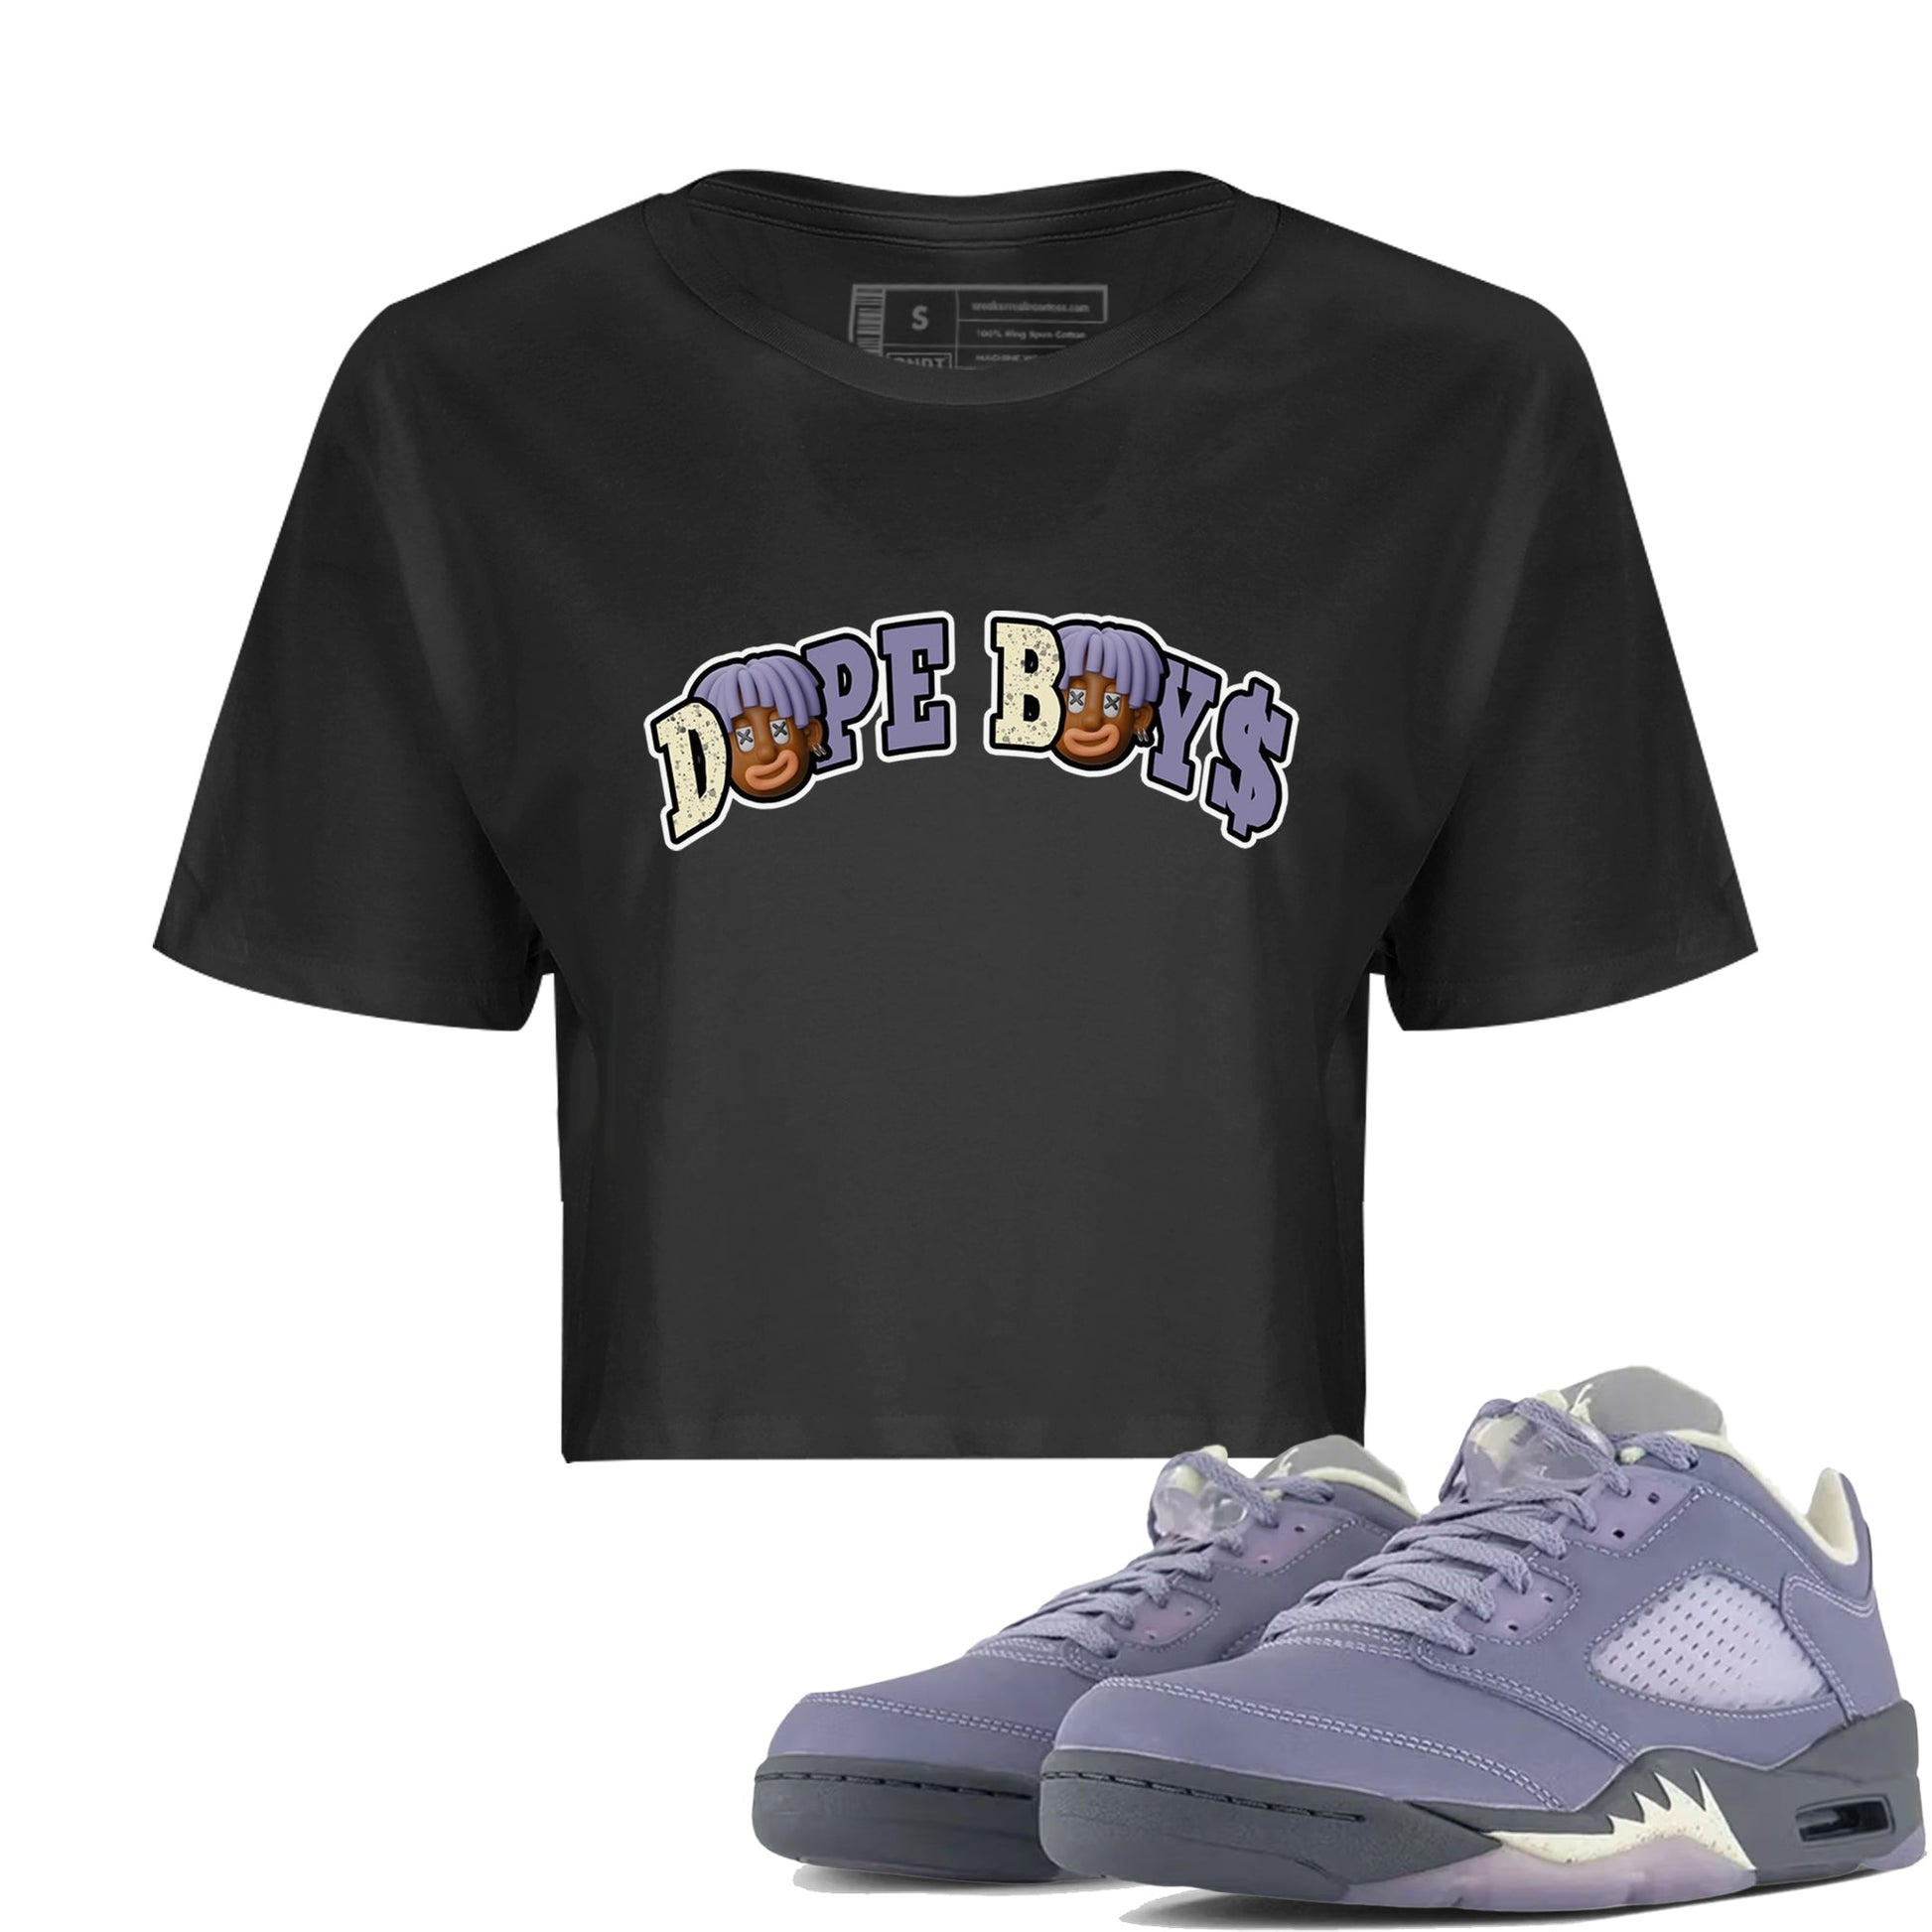 Air Jordan 5 Indigo Haze Sneaker Match Tees Dope Boys Sneaker Tees AJ5 Indigo Haze Sneaker Release Tees Women's Shirts Black 1